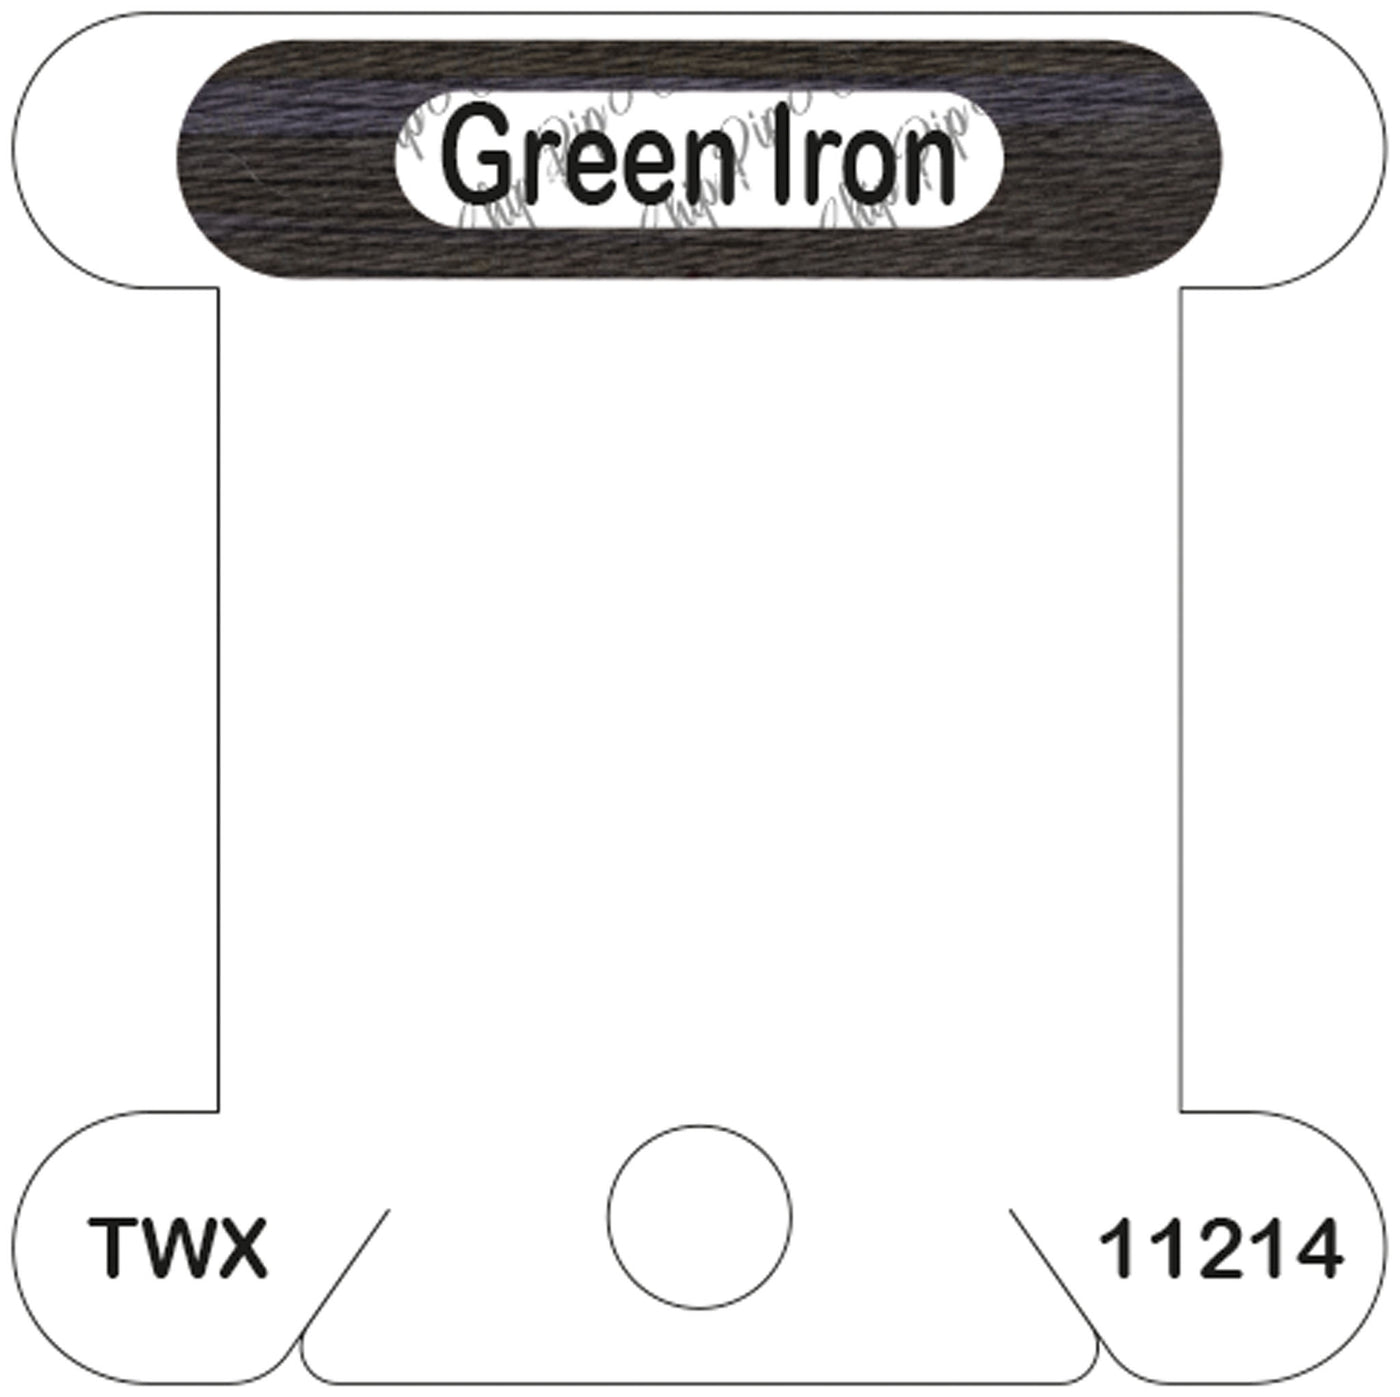 ThreadworX Green Iron acrylic bobbin